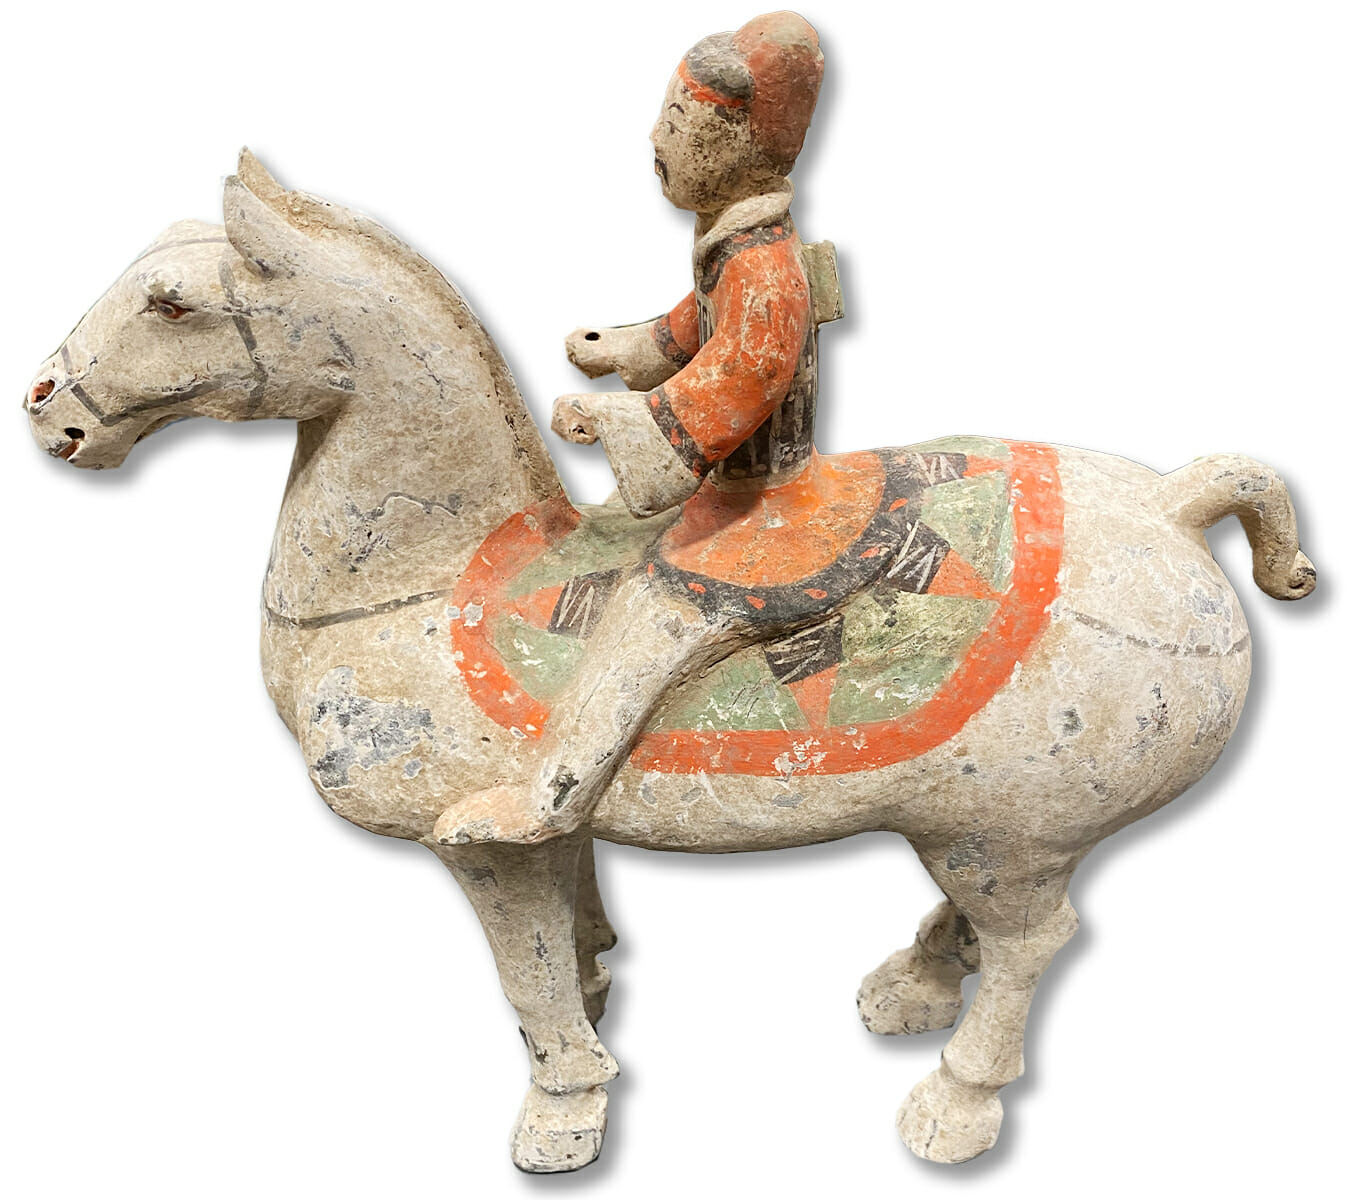 Terracotta Horseman after restoration